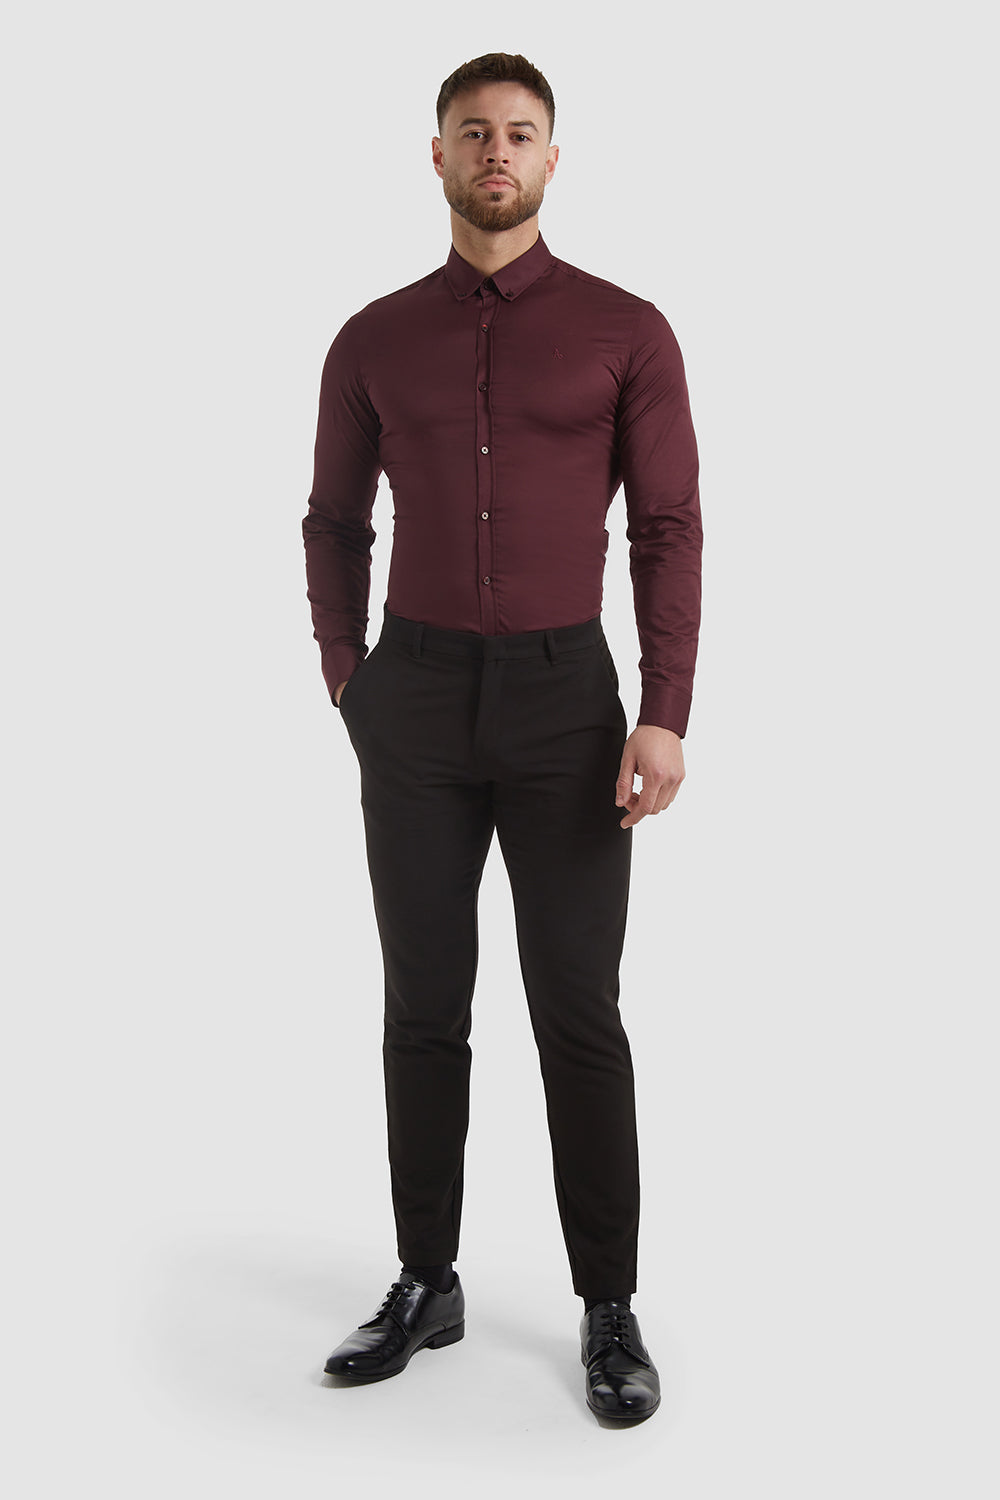 Buy Men's SPORT pants Burgundy Black Limit